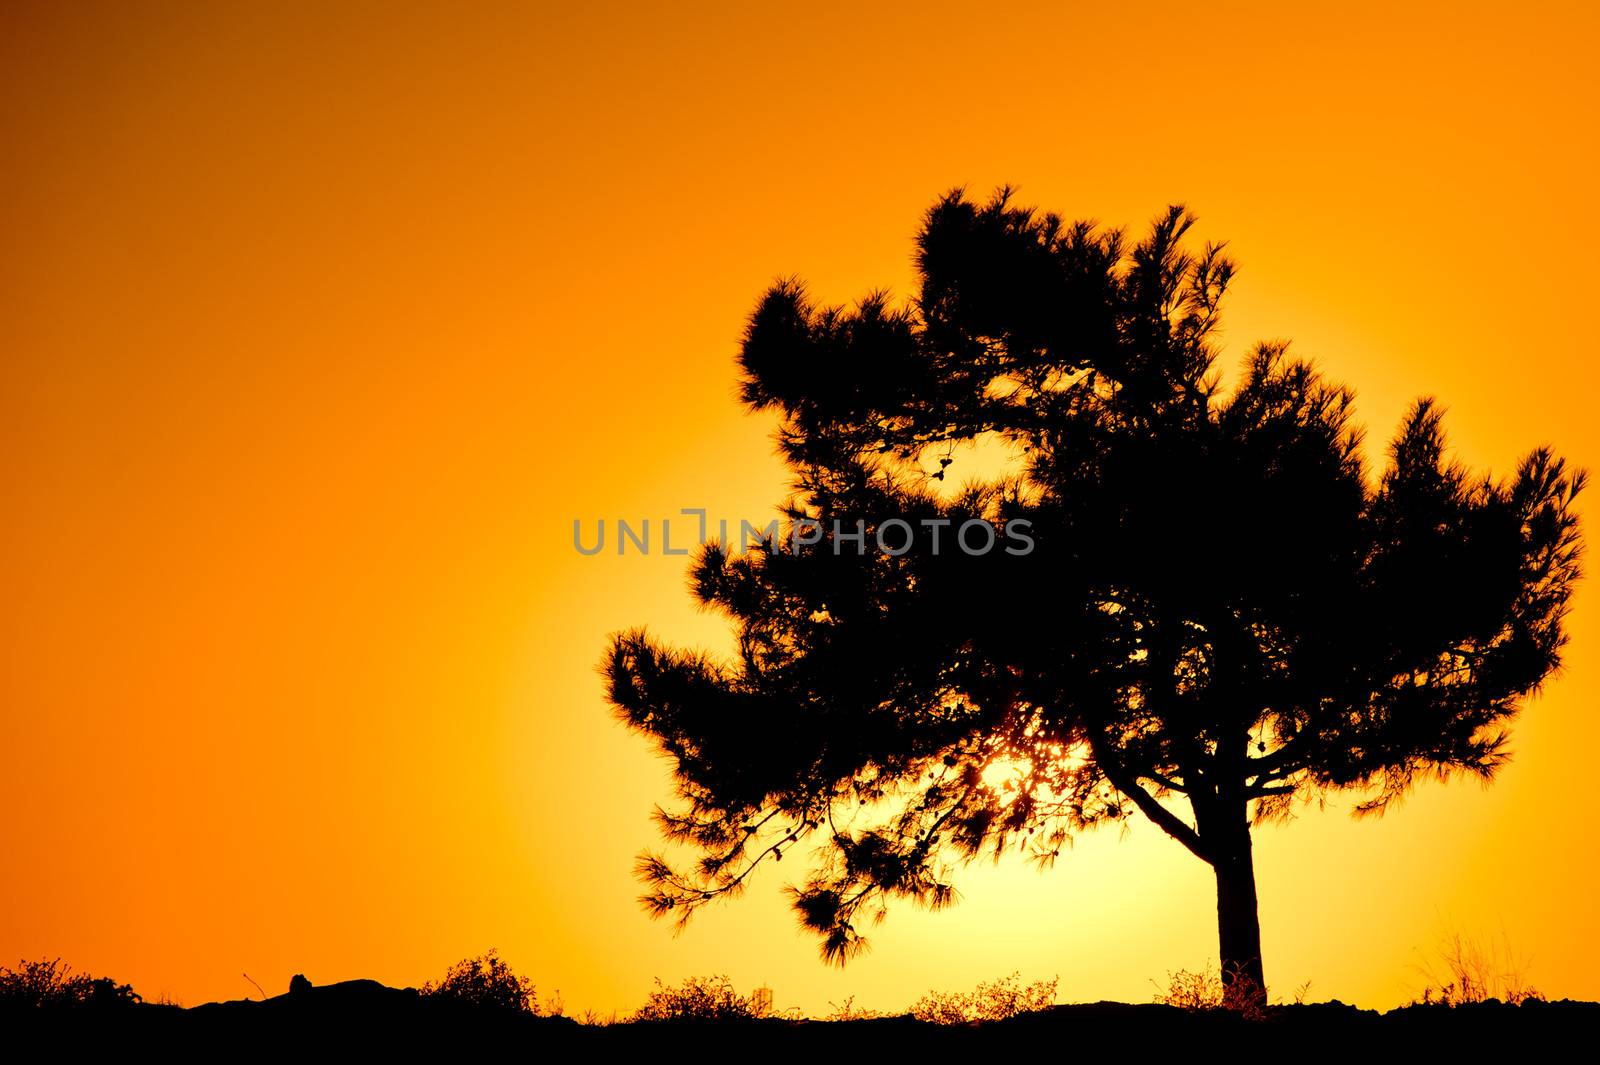 Single tree silhouette against sunrise by kosmsos111